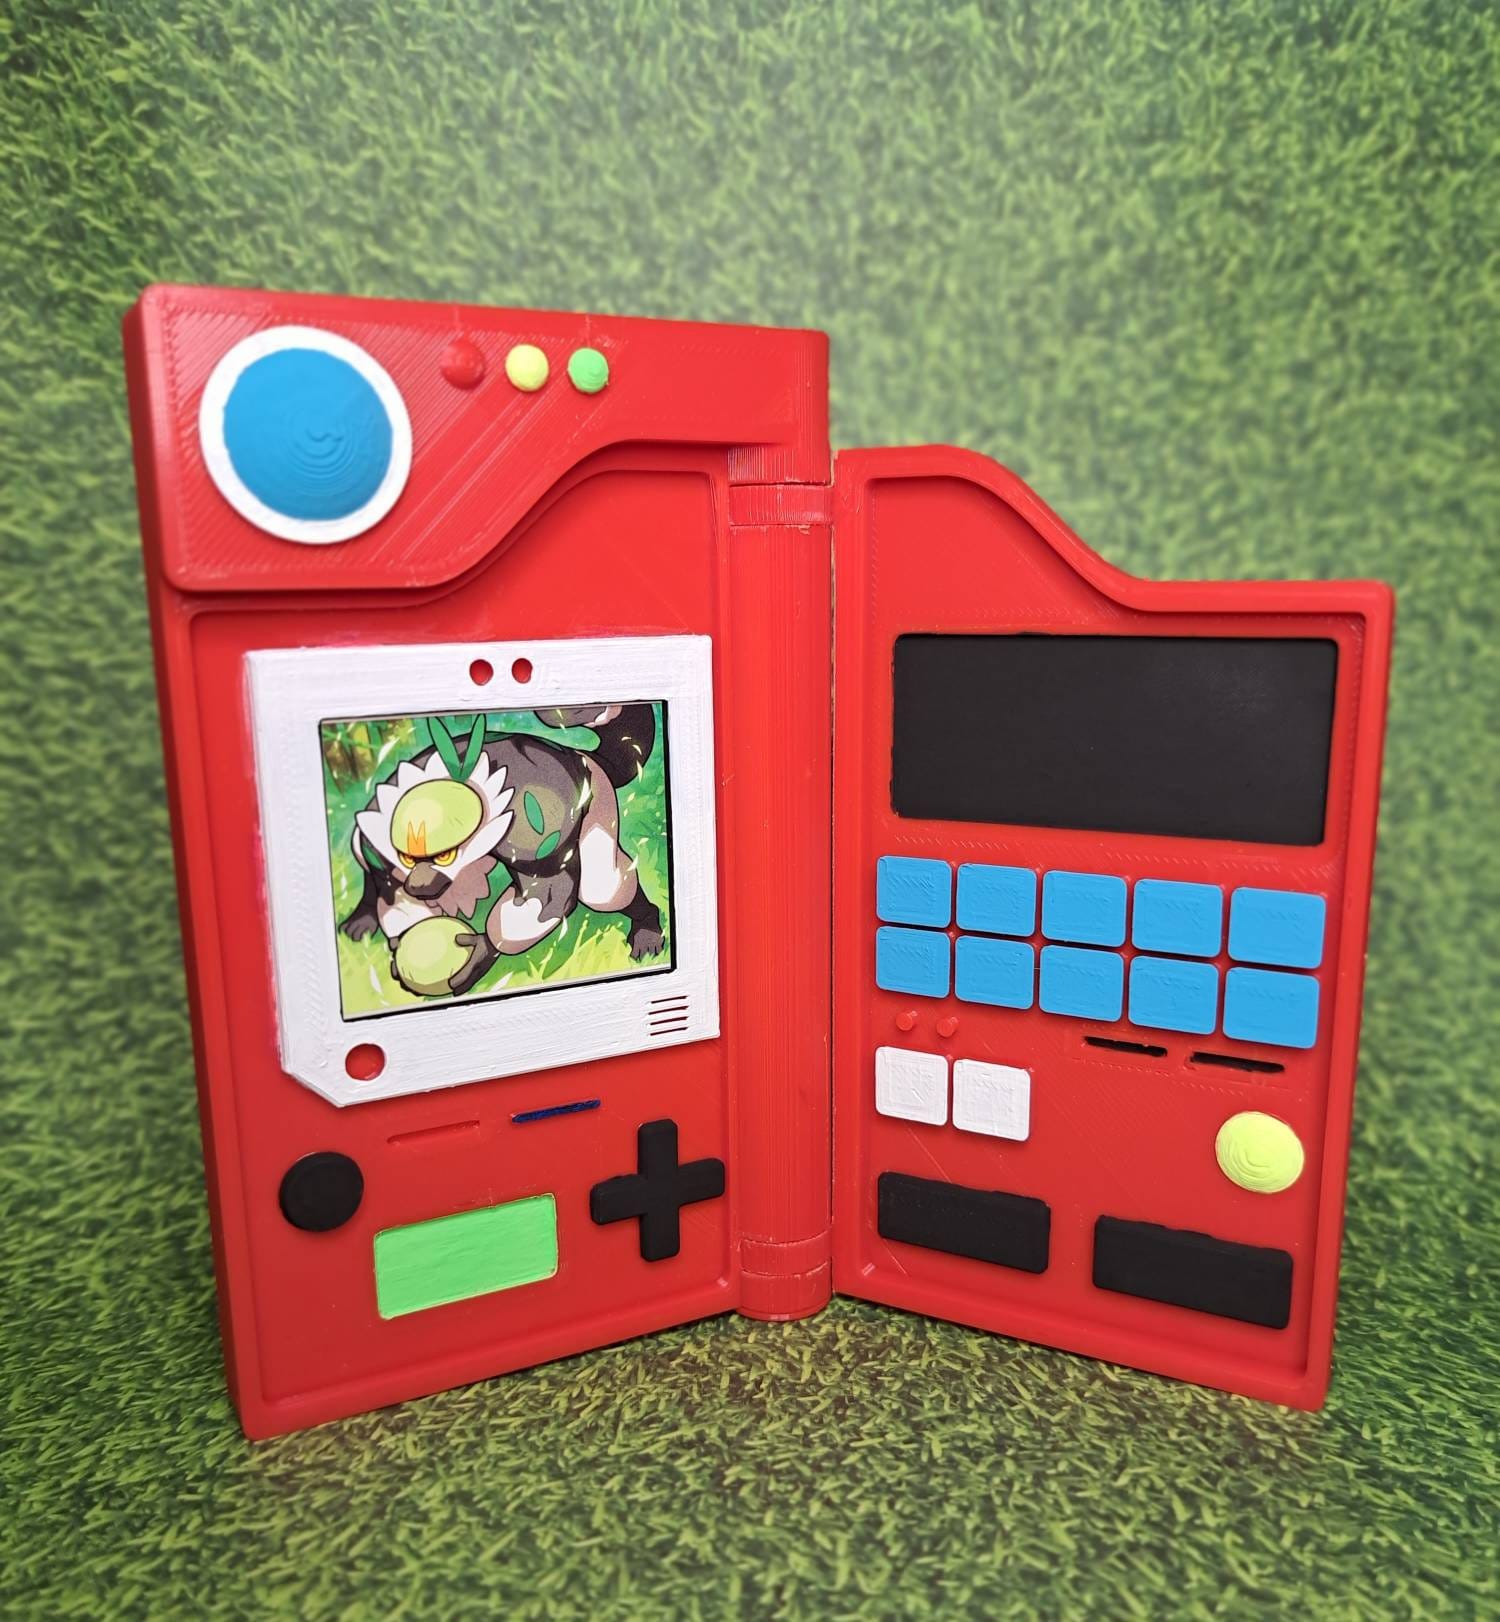 Pokedex 1995 Kanto Model and Custom Game Boy Style 3D model